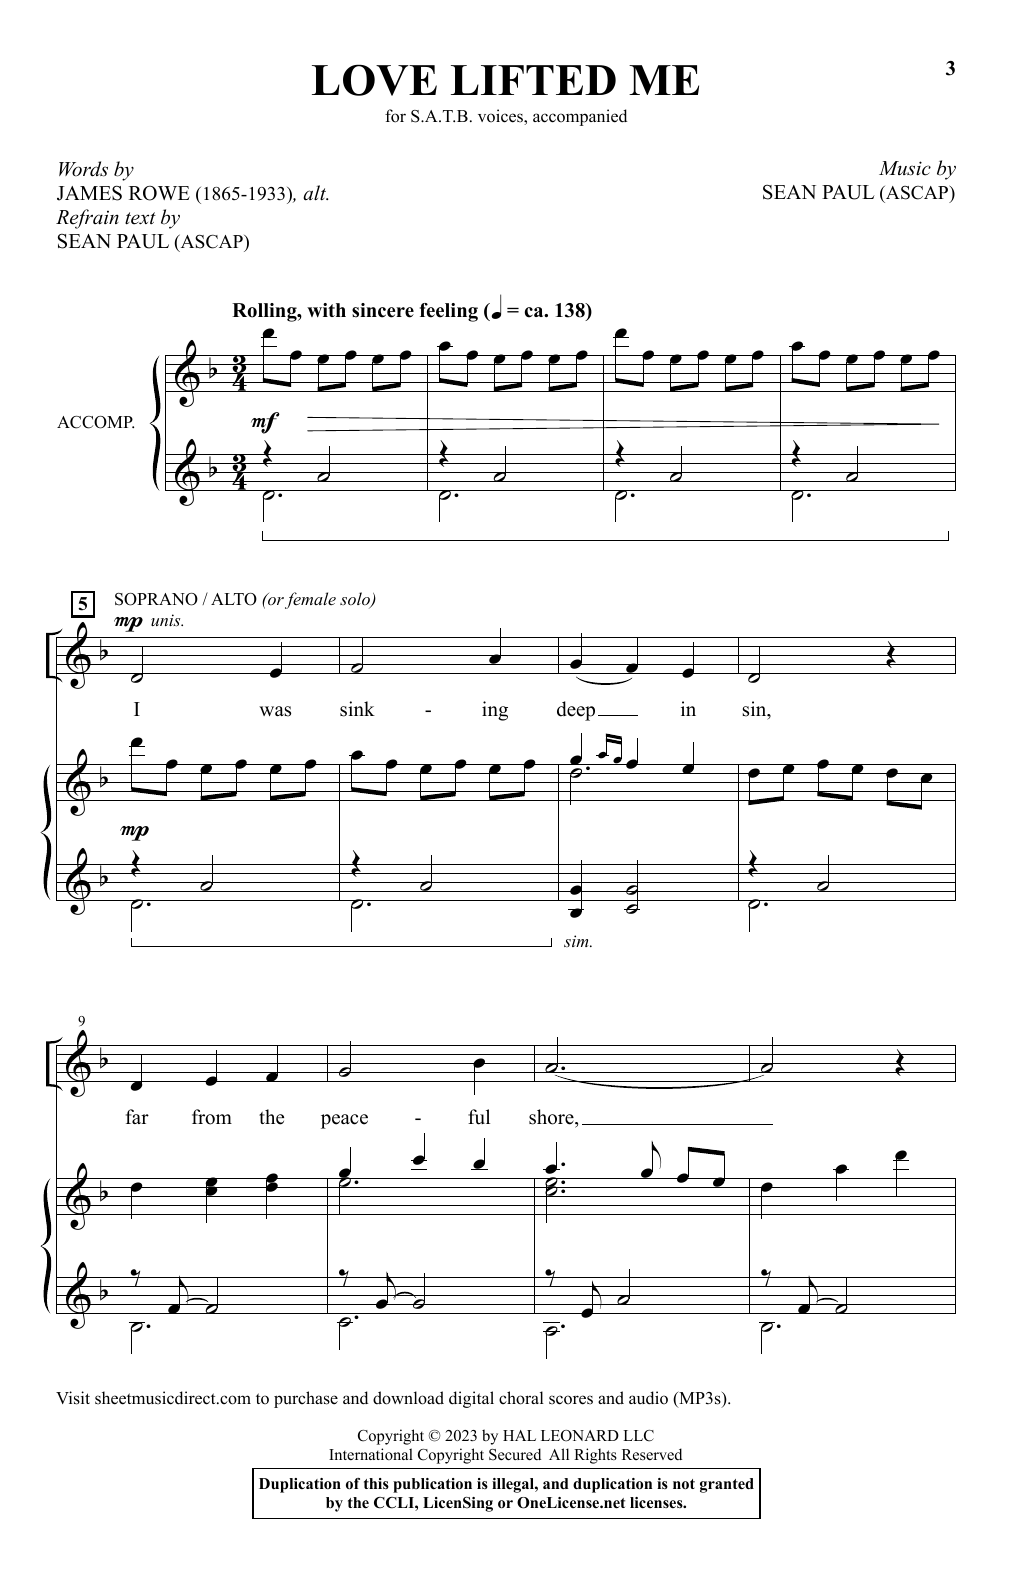 Sean Paul Love Lifted Me Sheet Music Notes & Chords for SATB Choir - Download or Print PDF